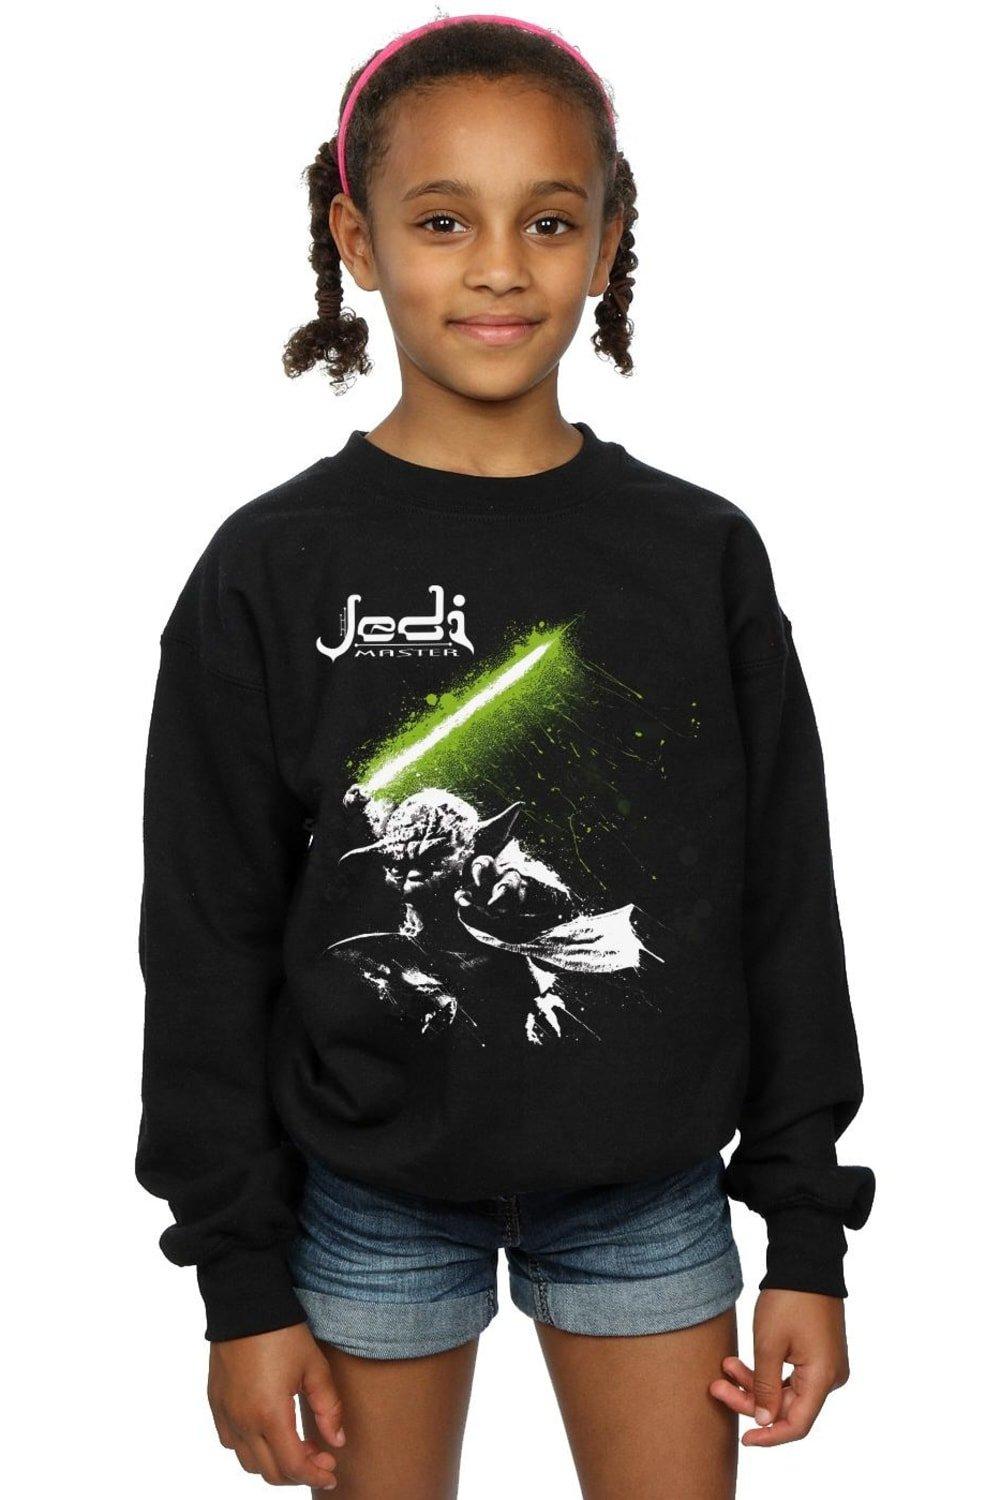 Yoda Jedi Master Sweatshirt